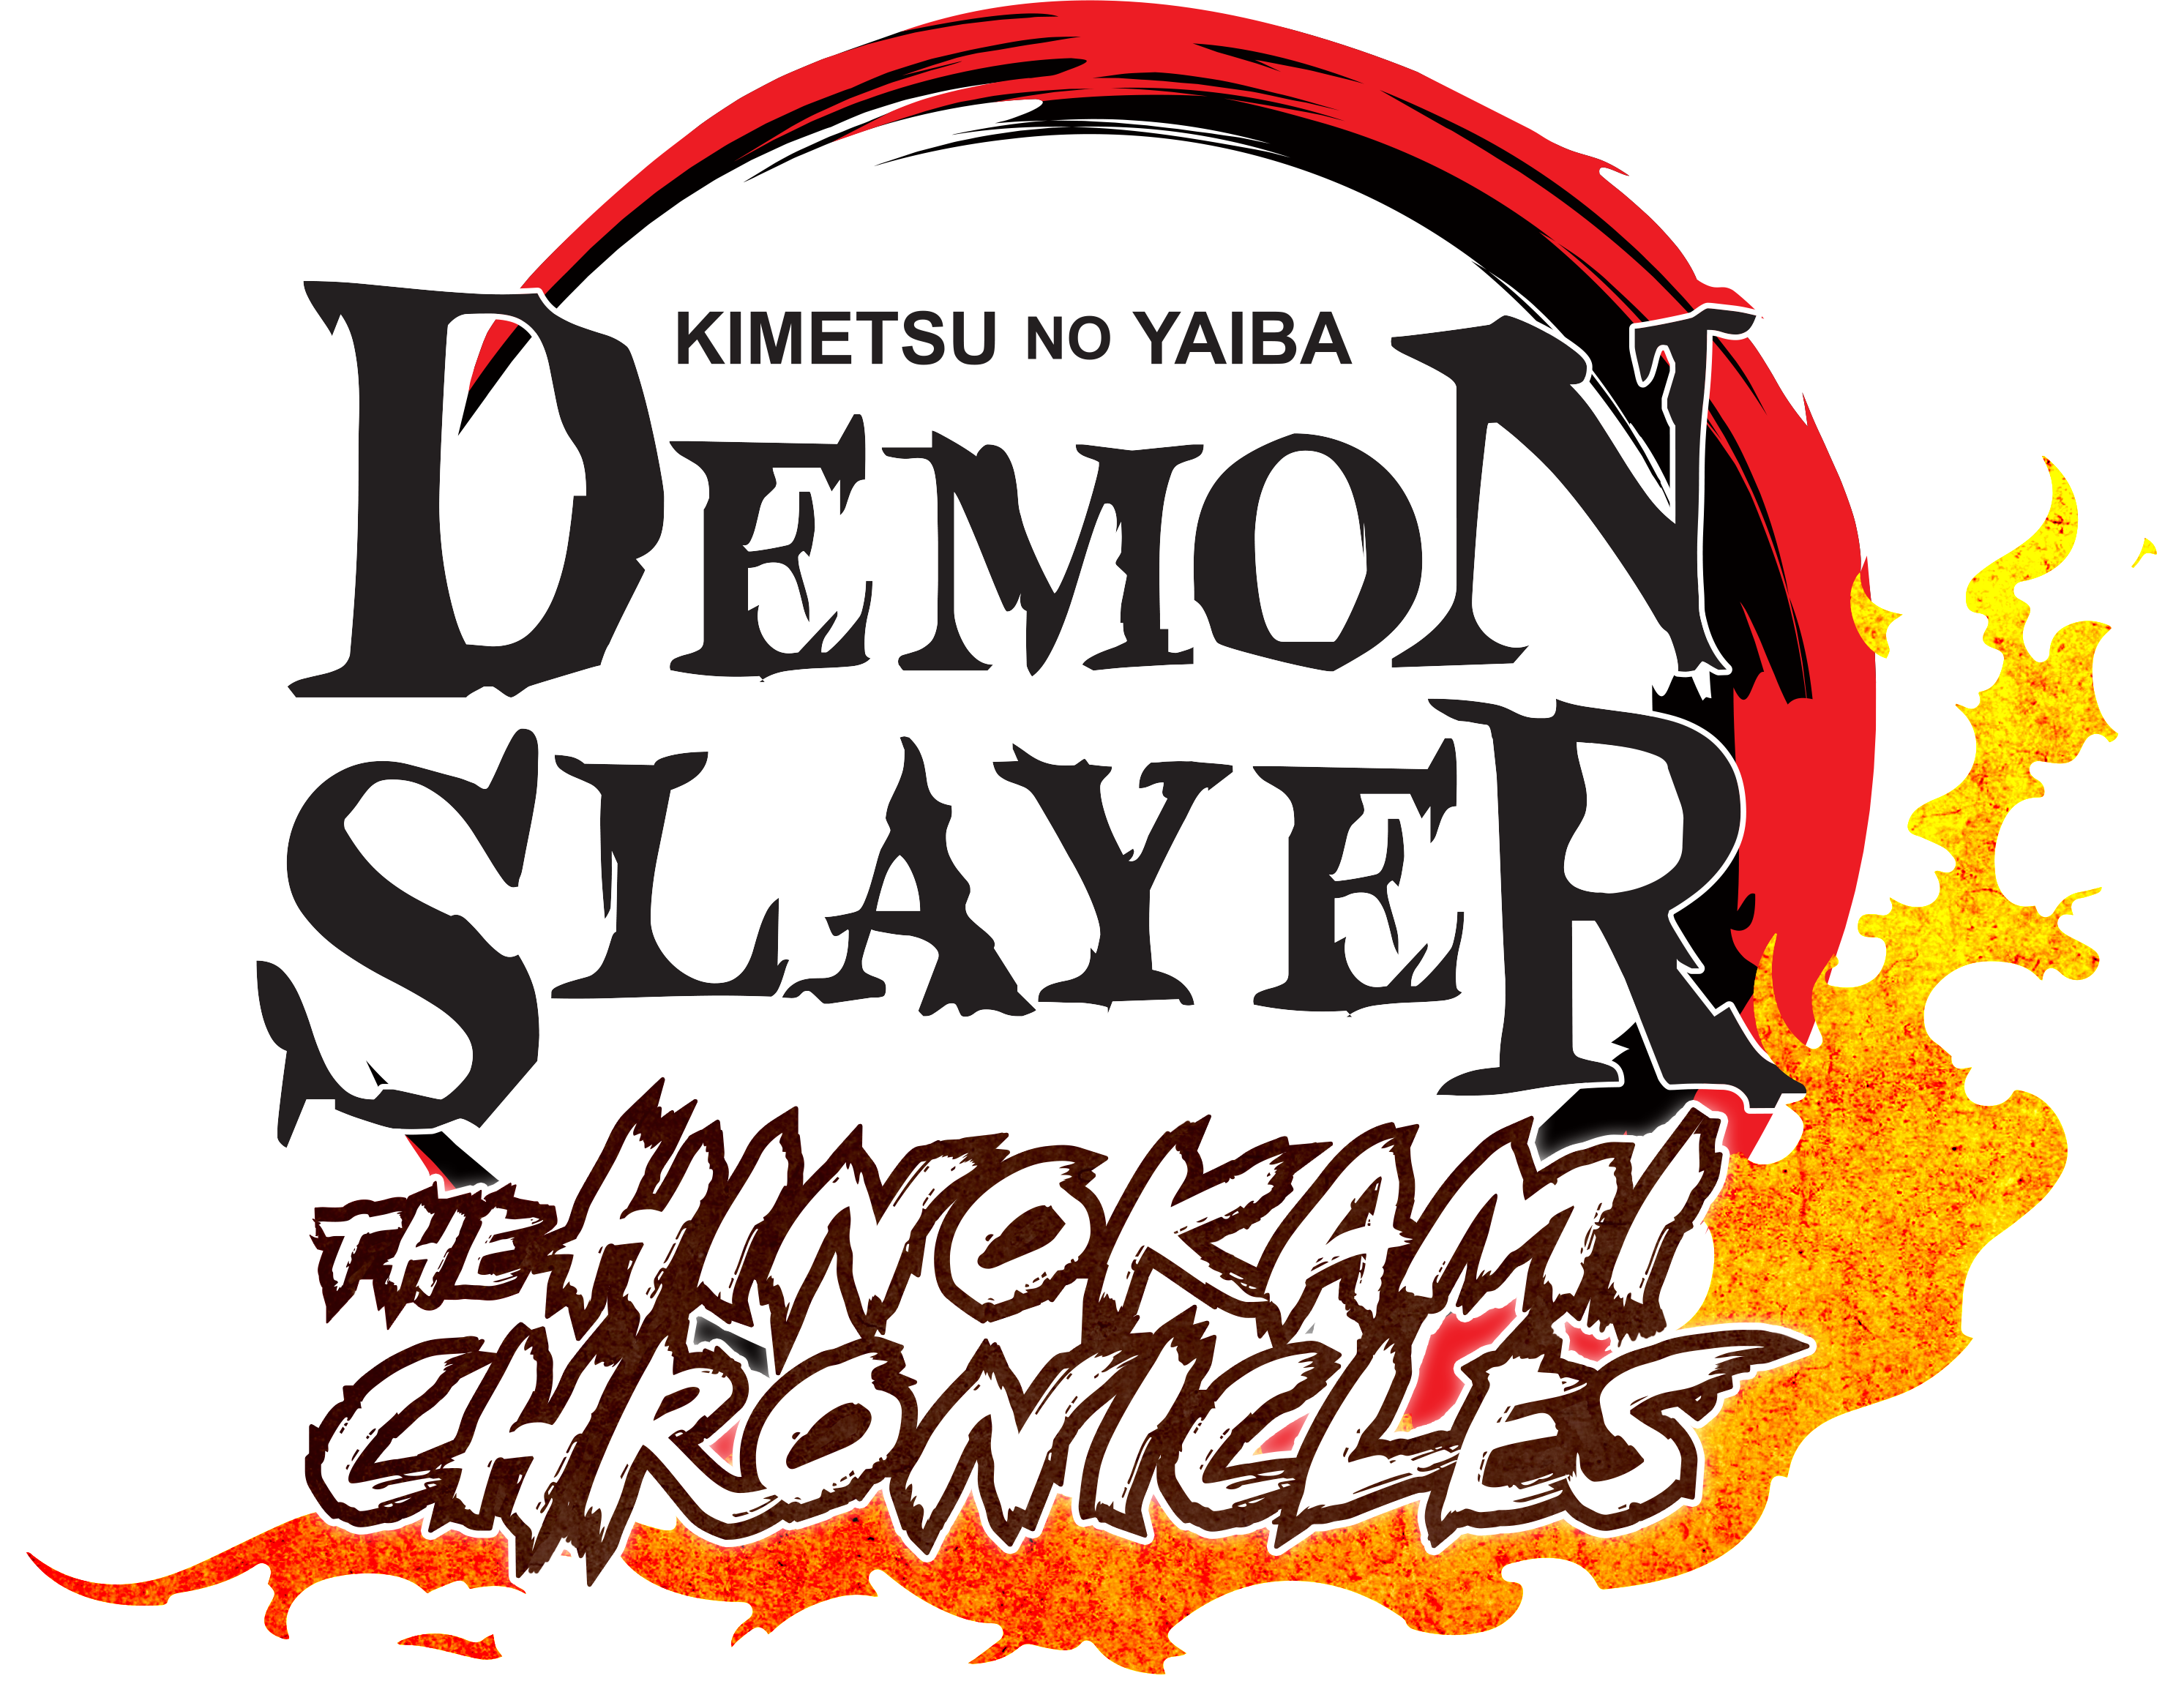 Demon slayer hinokami chronicles